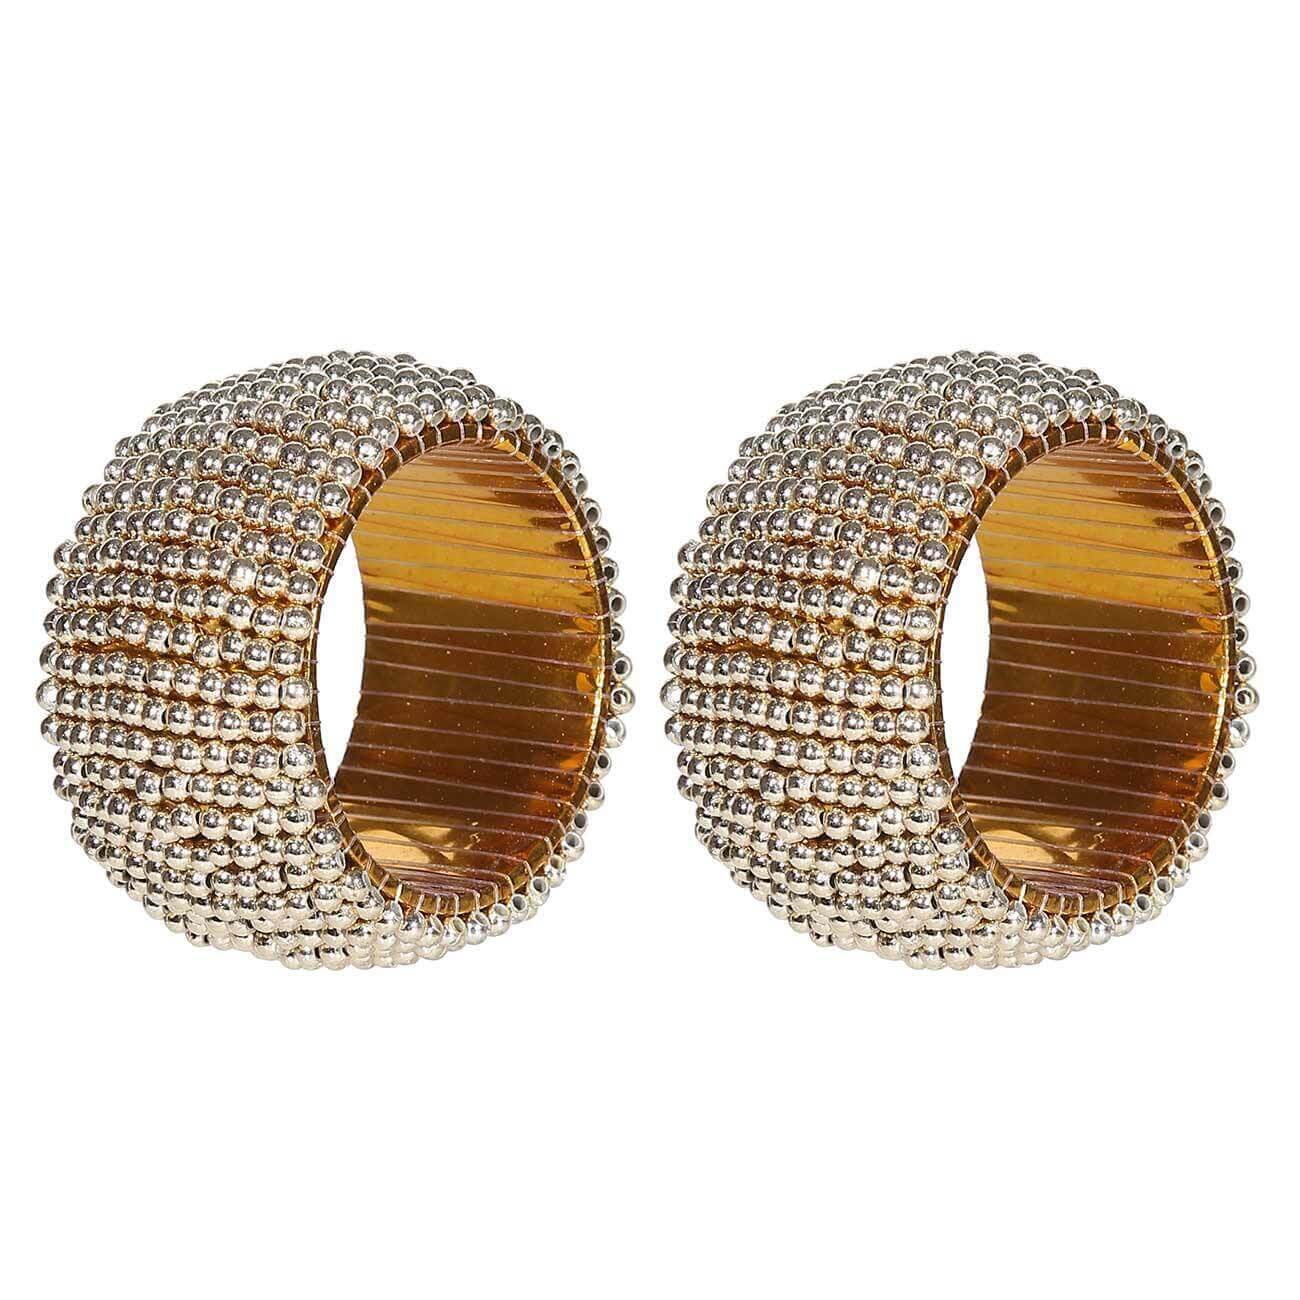 Кольцо для салфеток, 5 см, 2 шт, бисер, круглое, золотистое, Shiny beads бисер чехия preciosa 10 0 5 гр 8289